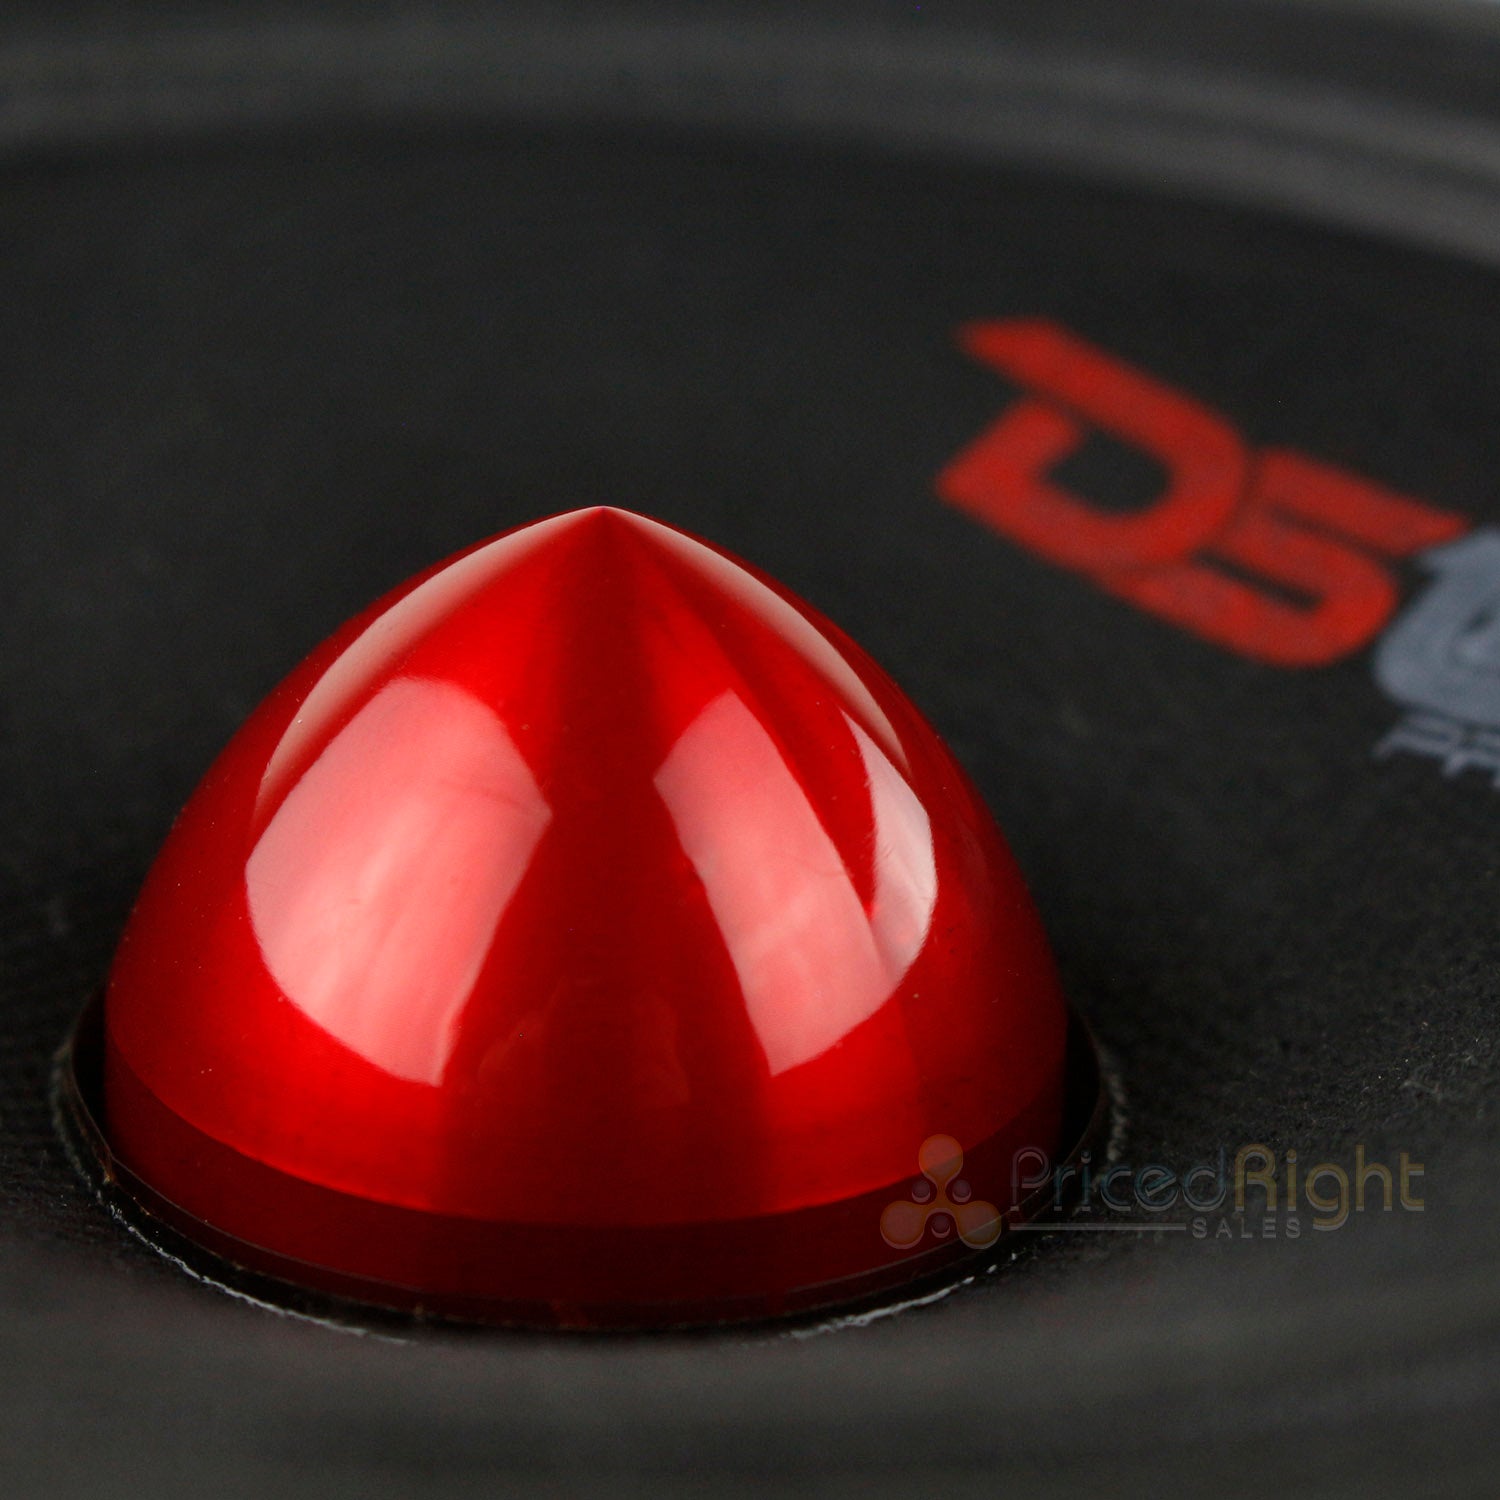 DS18 6.5" Inch Midrange Loudspeaker 480 Watt Max Red Bullet 4 Ohm PRO-GM6.4B